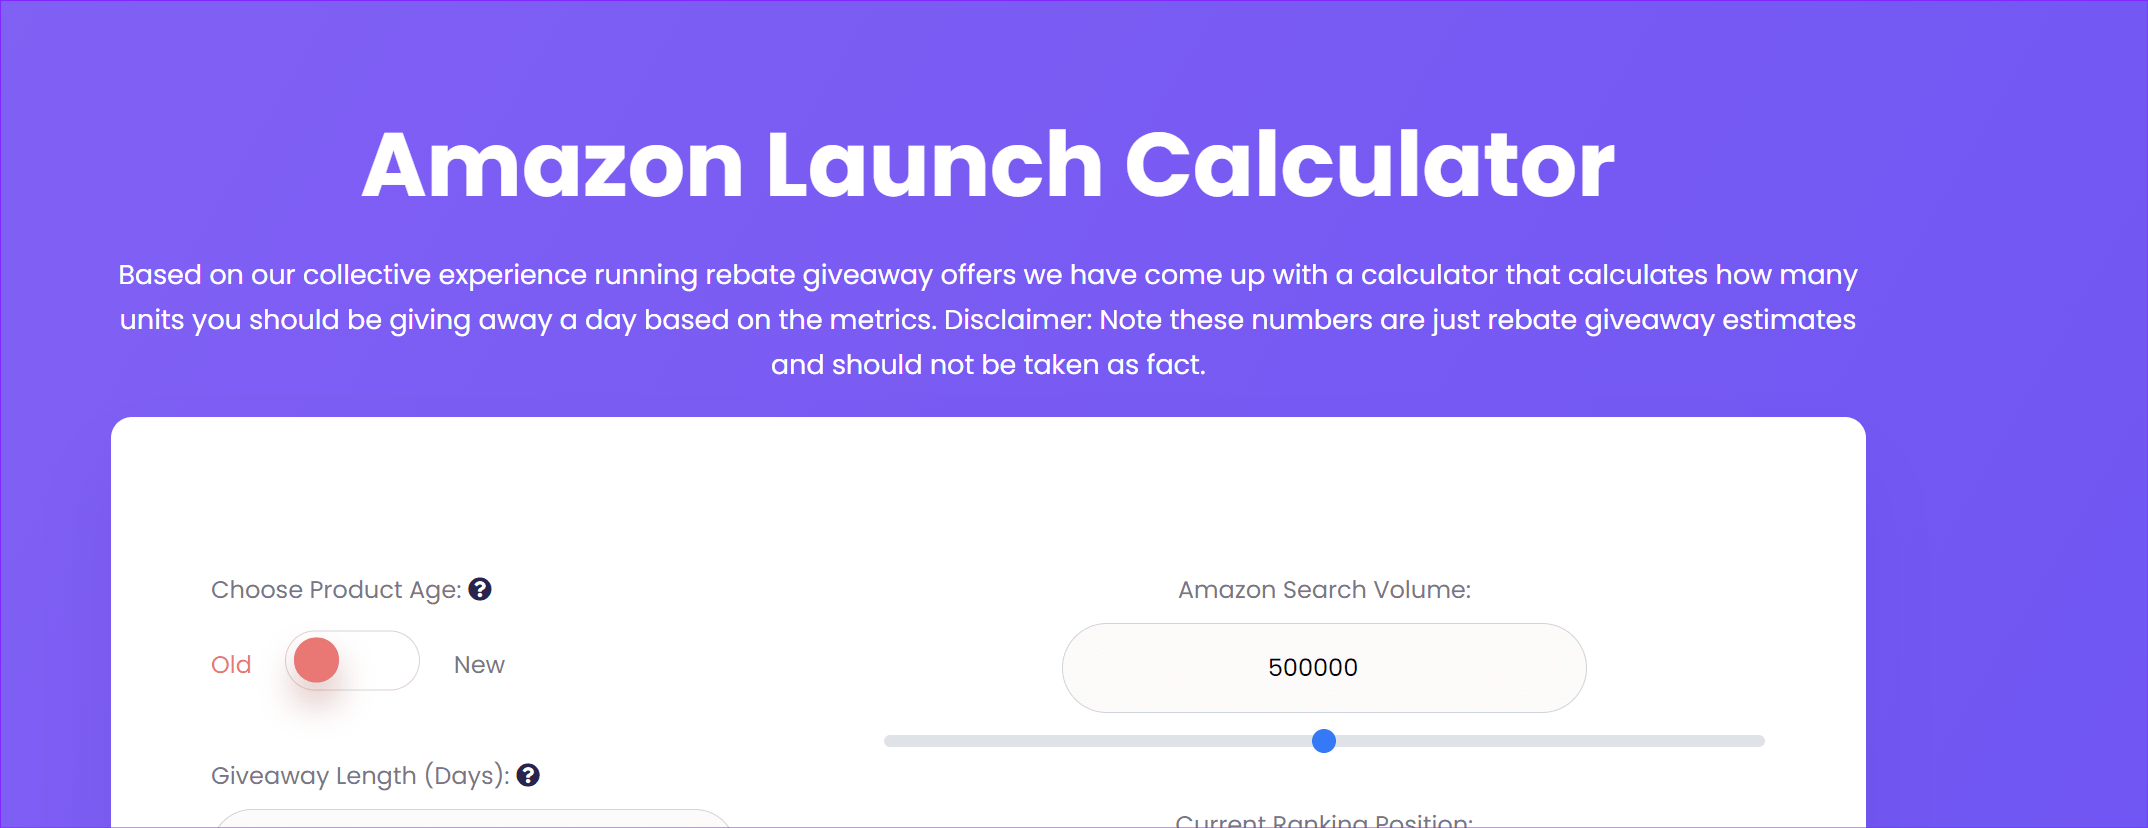 Amazon launch calculator